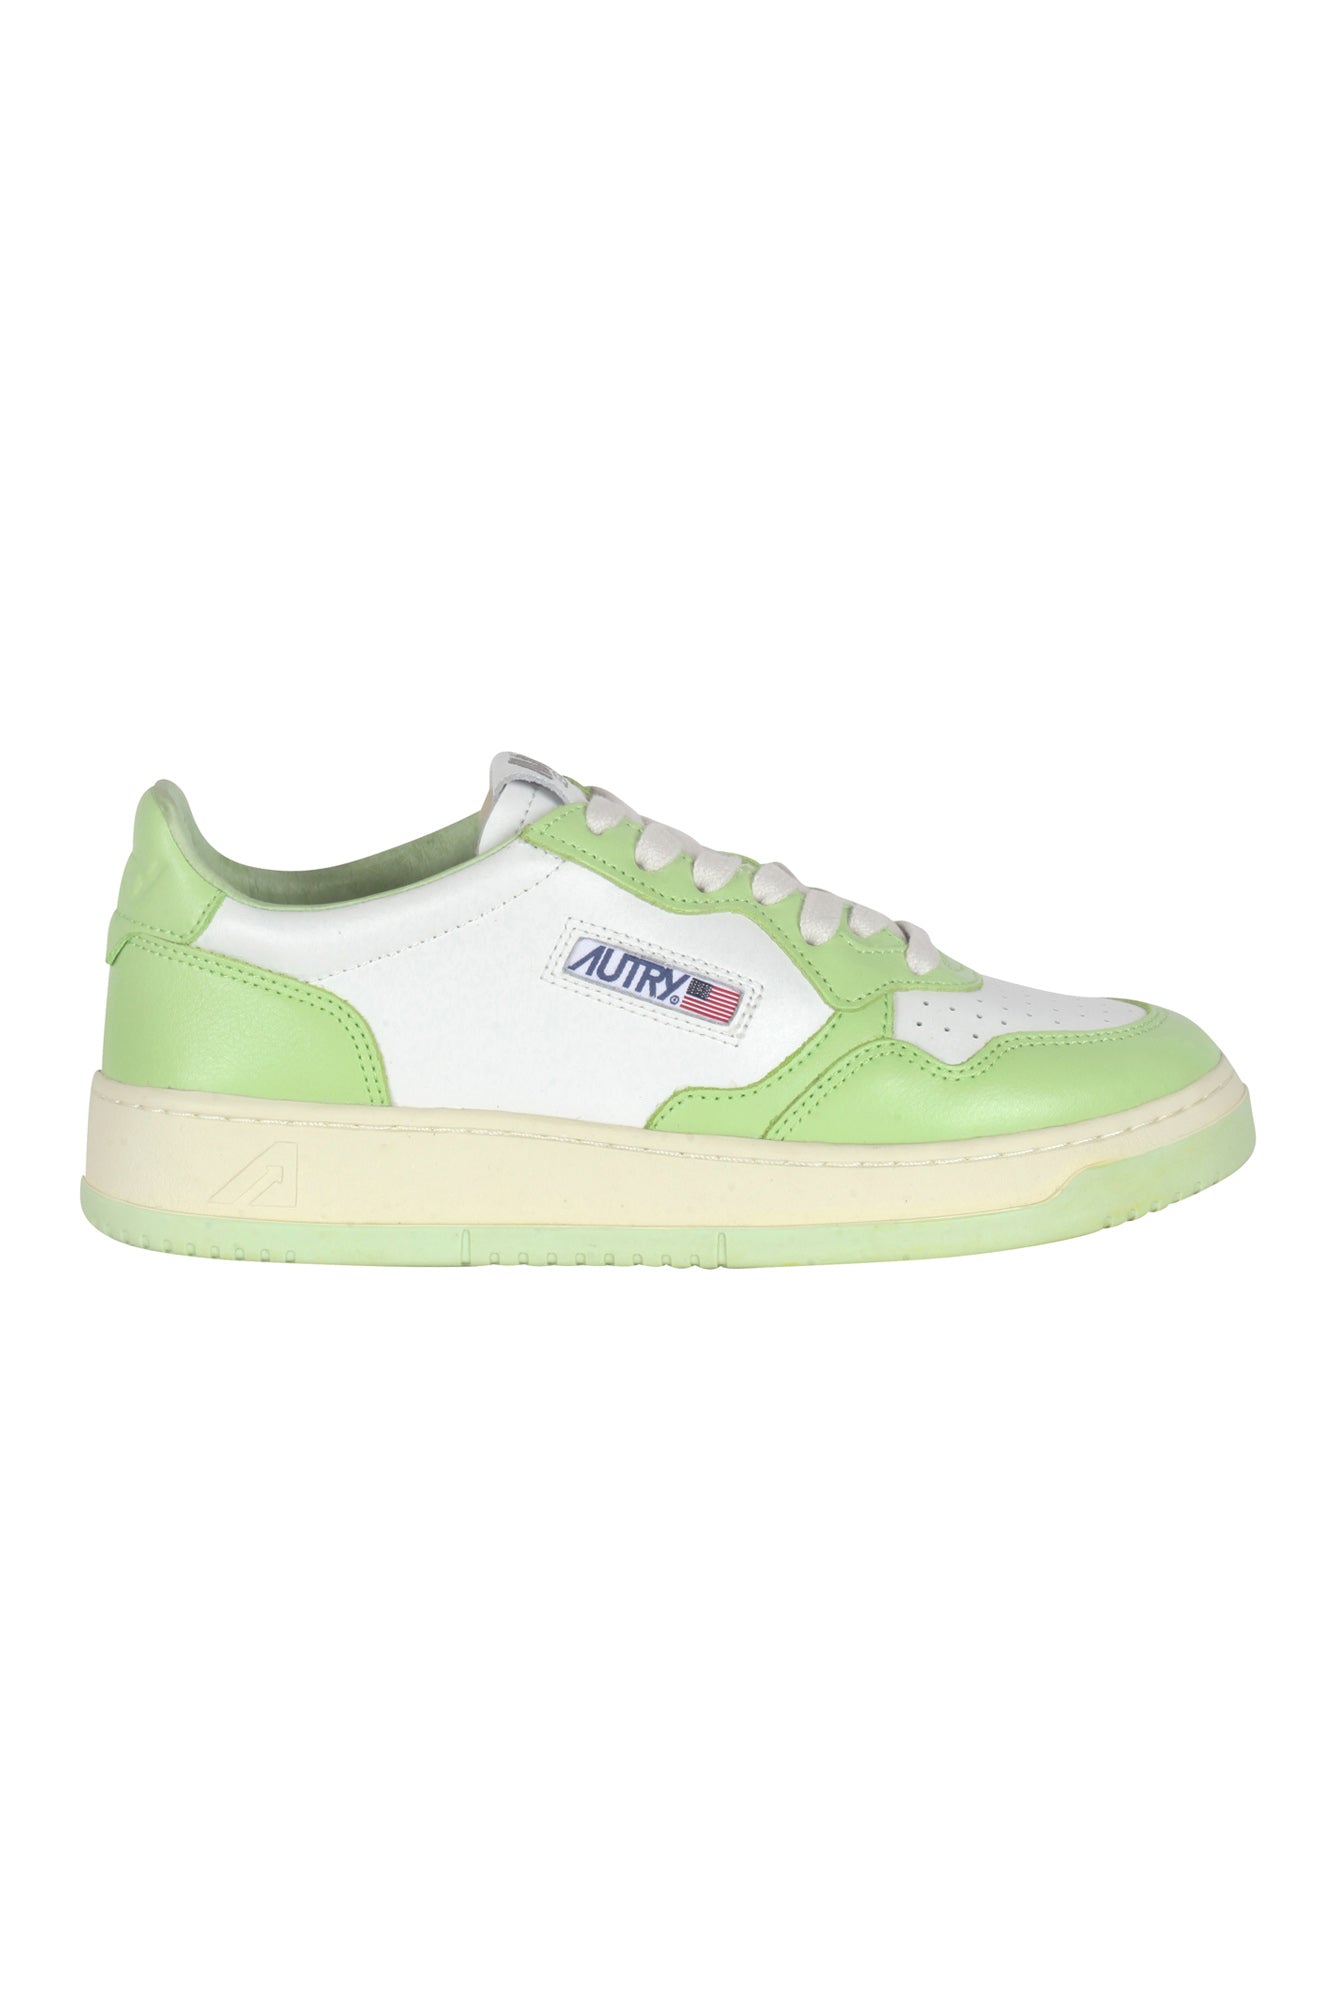 Autry - Sneakers - 430075 - Bianco/Verde mela